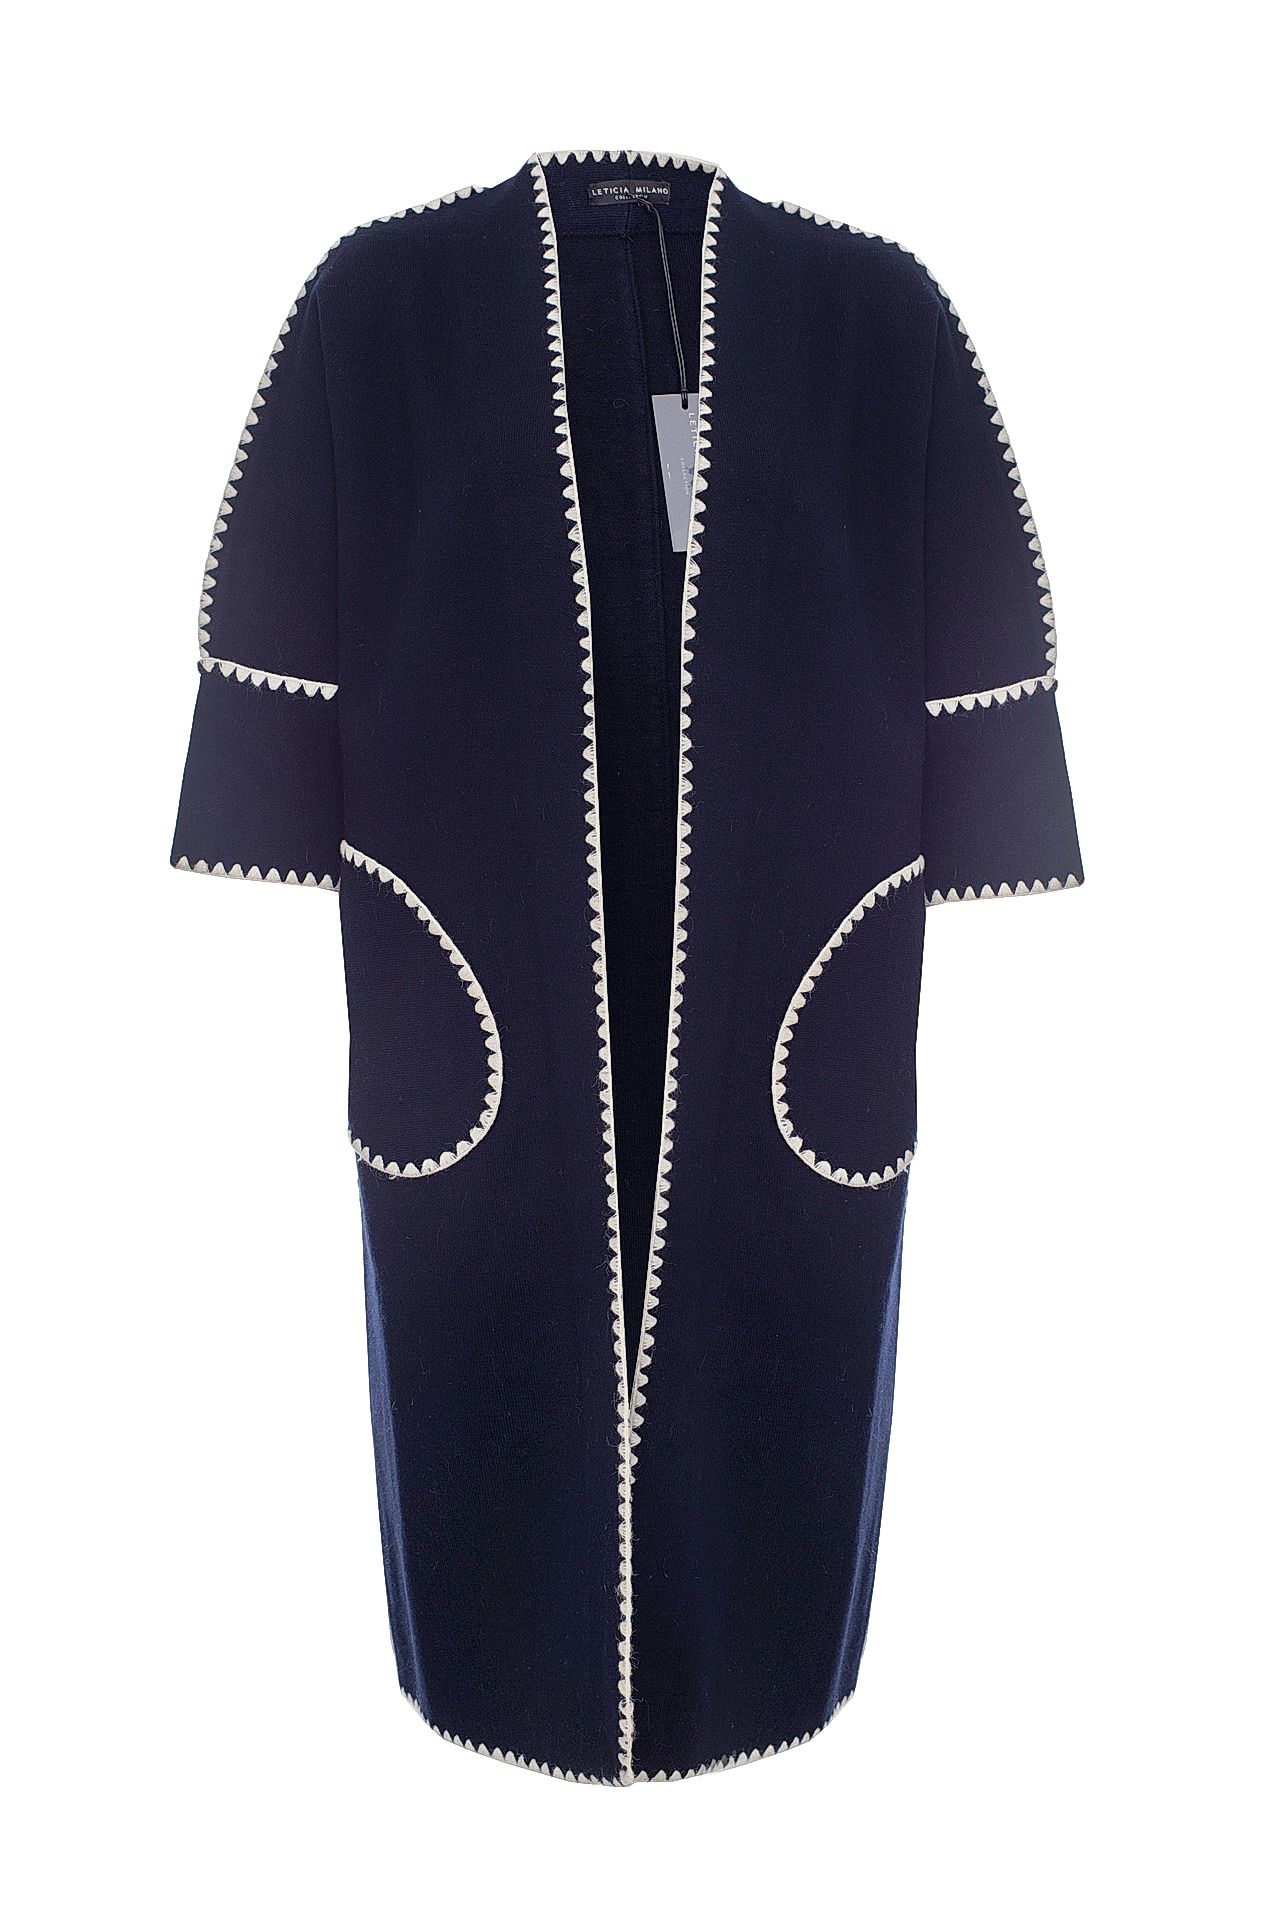 Одежда женская Кардиган LETICIA MILANO (MG15120T36/17.2). Купить за 9900 руб.